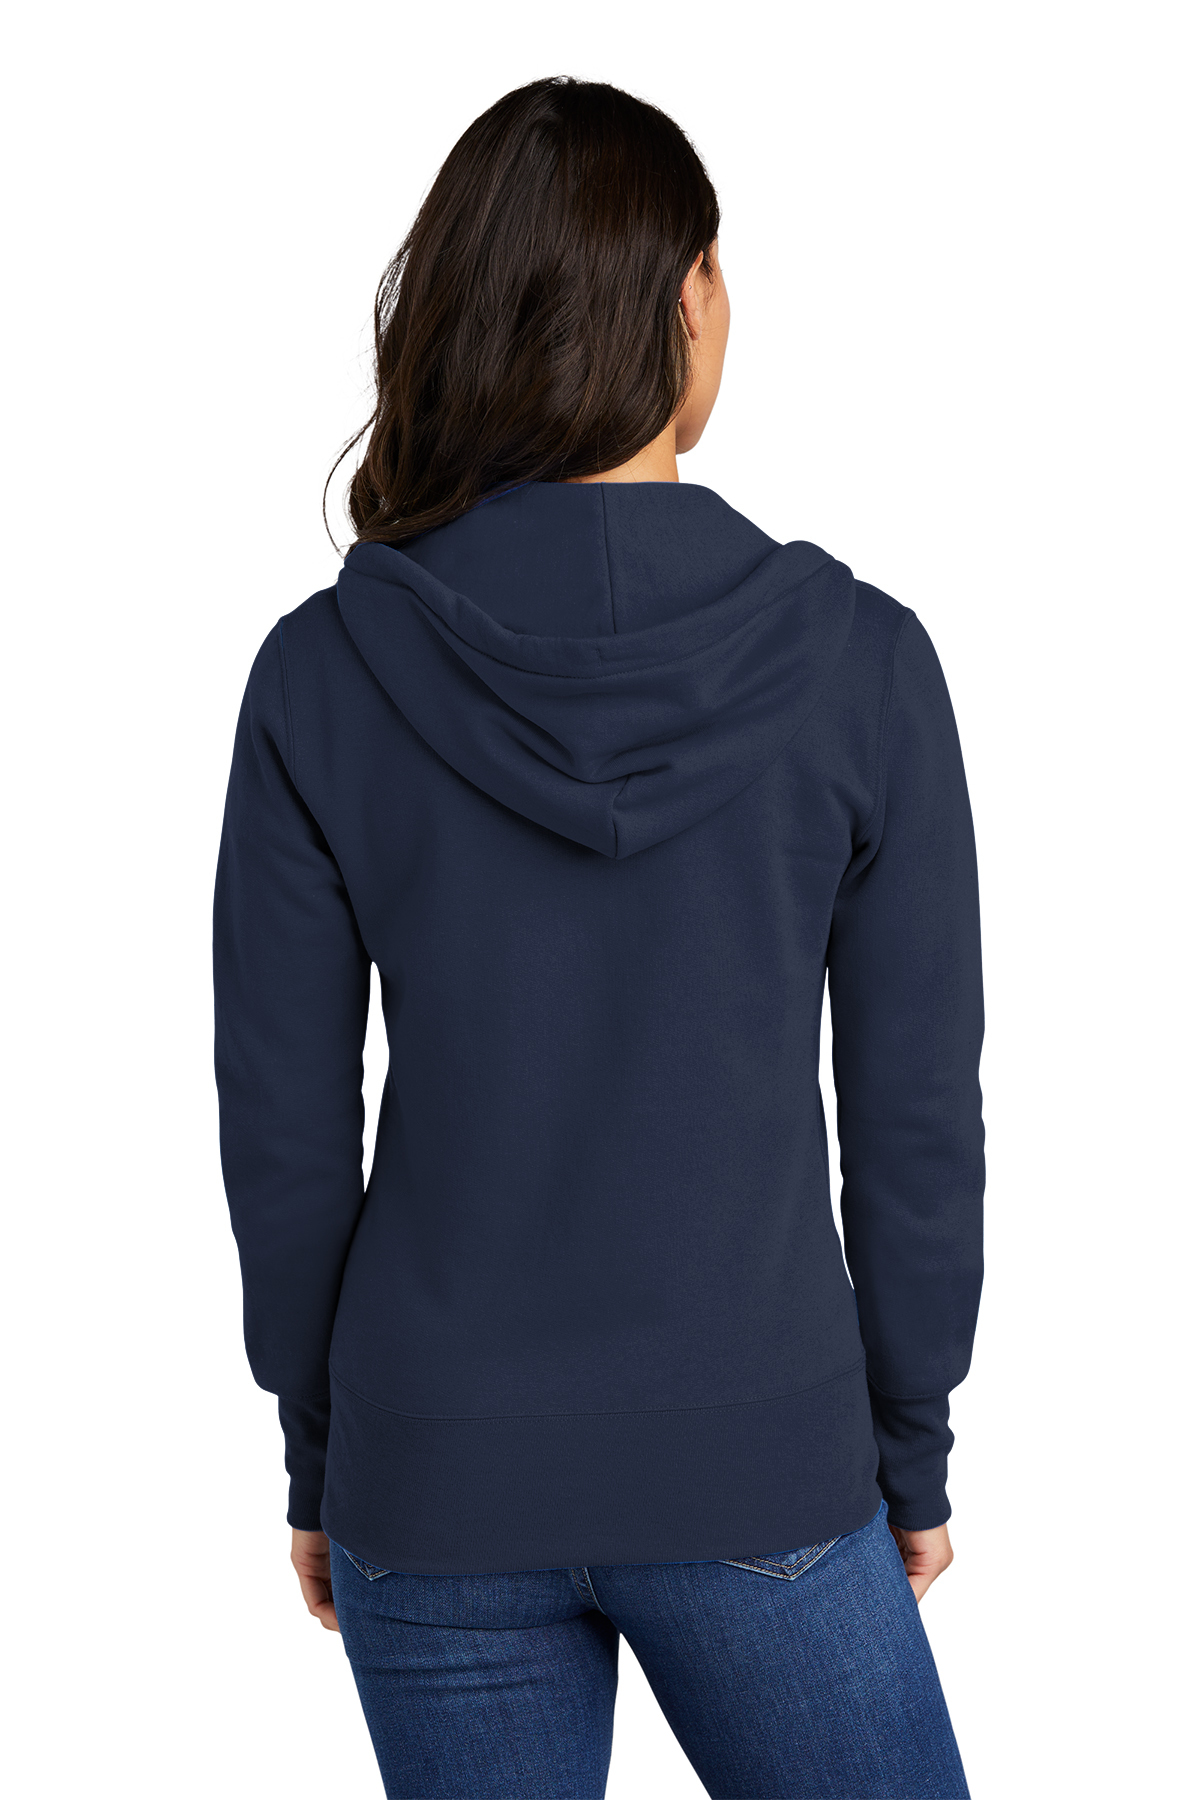 Port & Company Ladies Core Fleece Pullover Hooded Sweatshirt, Product